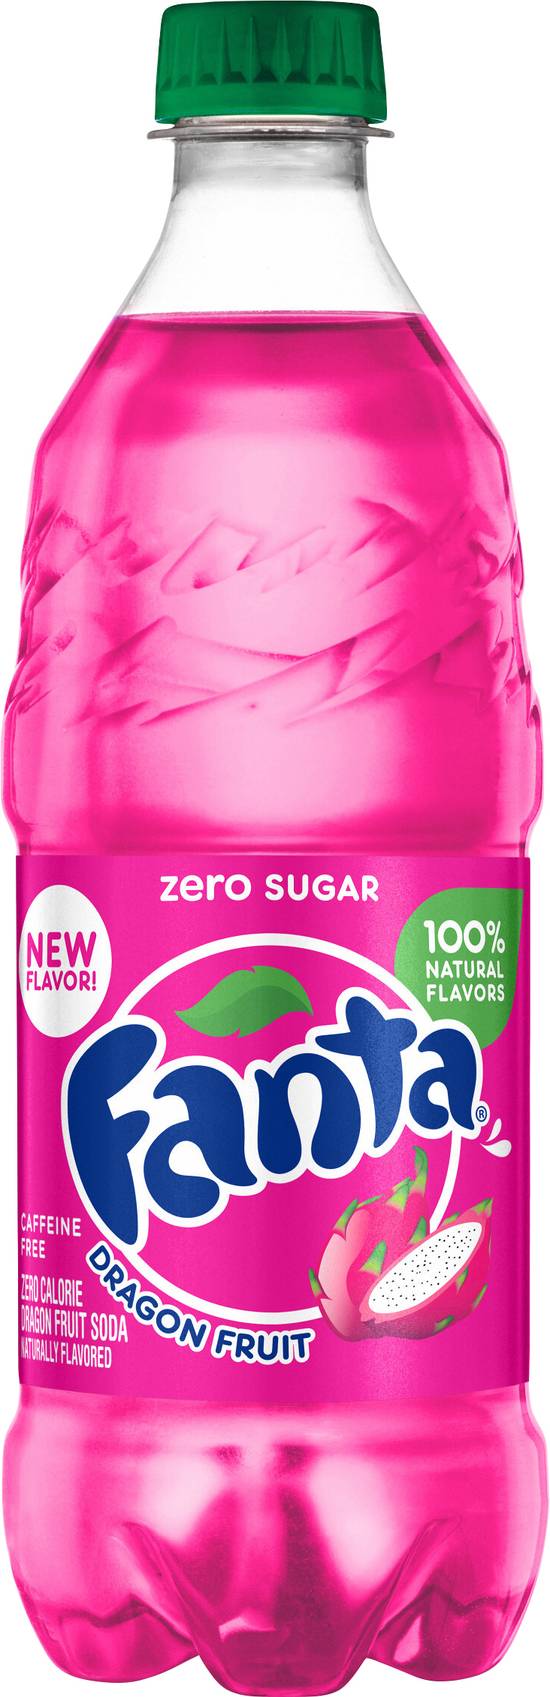 Fanta Zero Sugar Soda (20 fl oz)